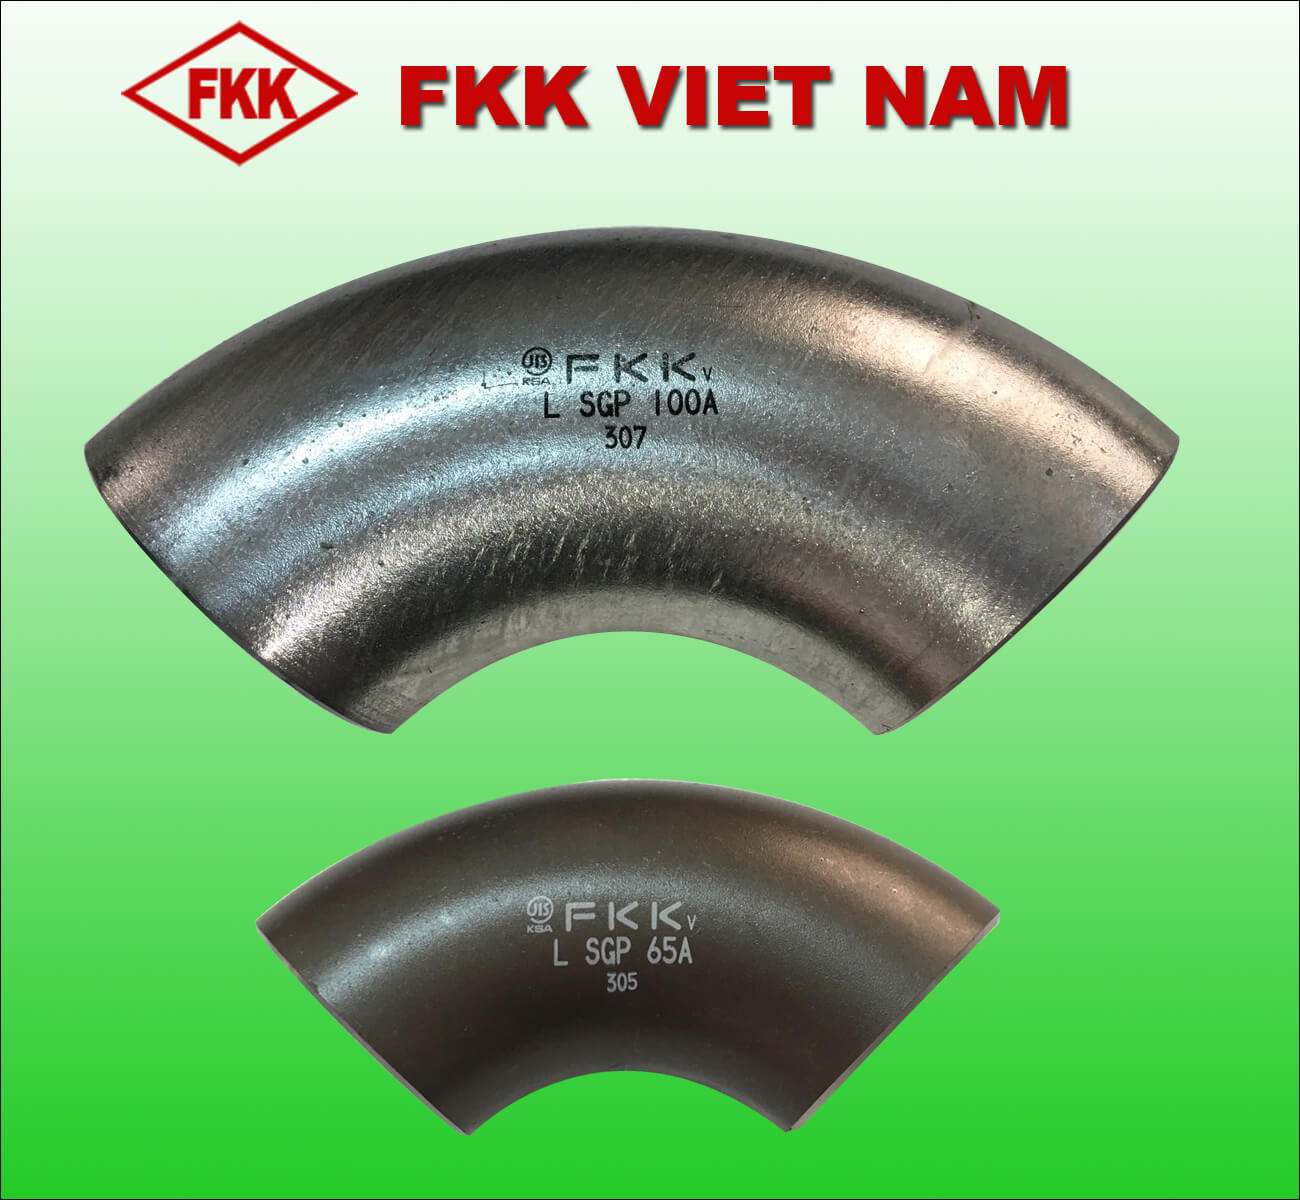 Fkk Vietnam Co Ltd Fact Link Vietnam